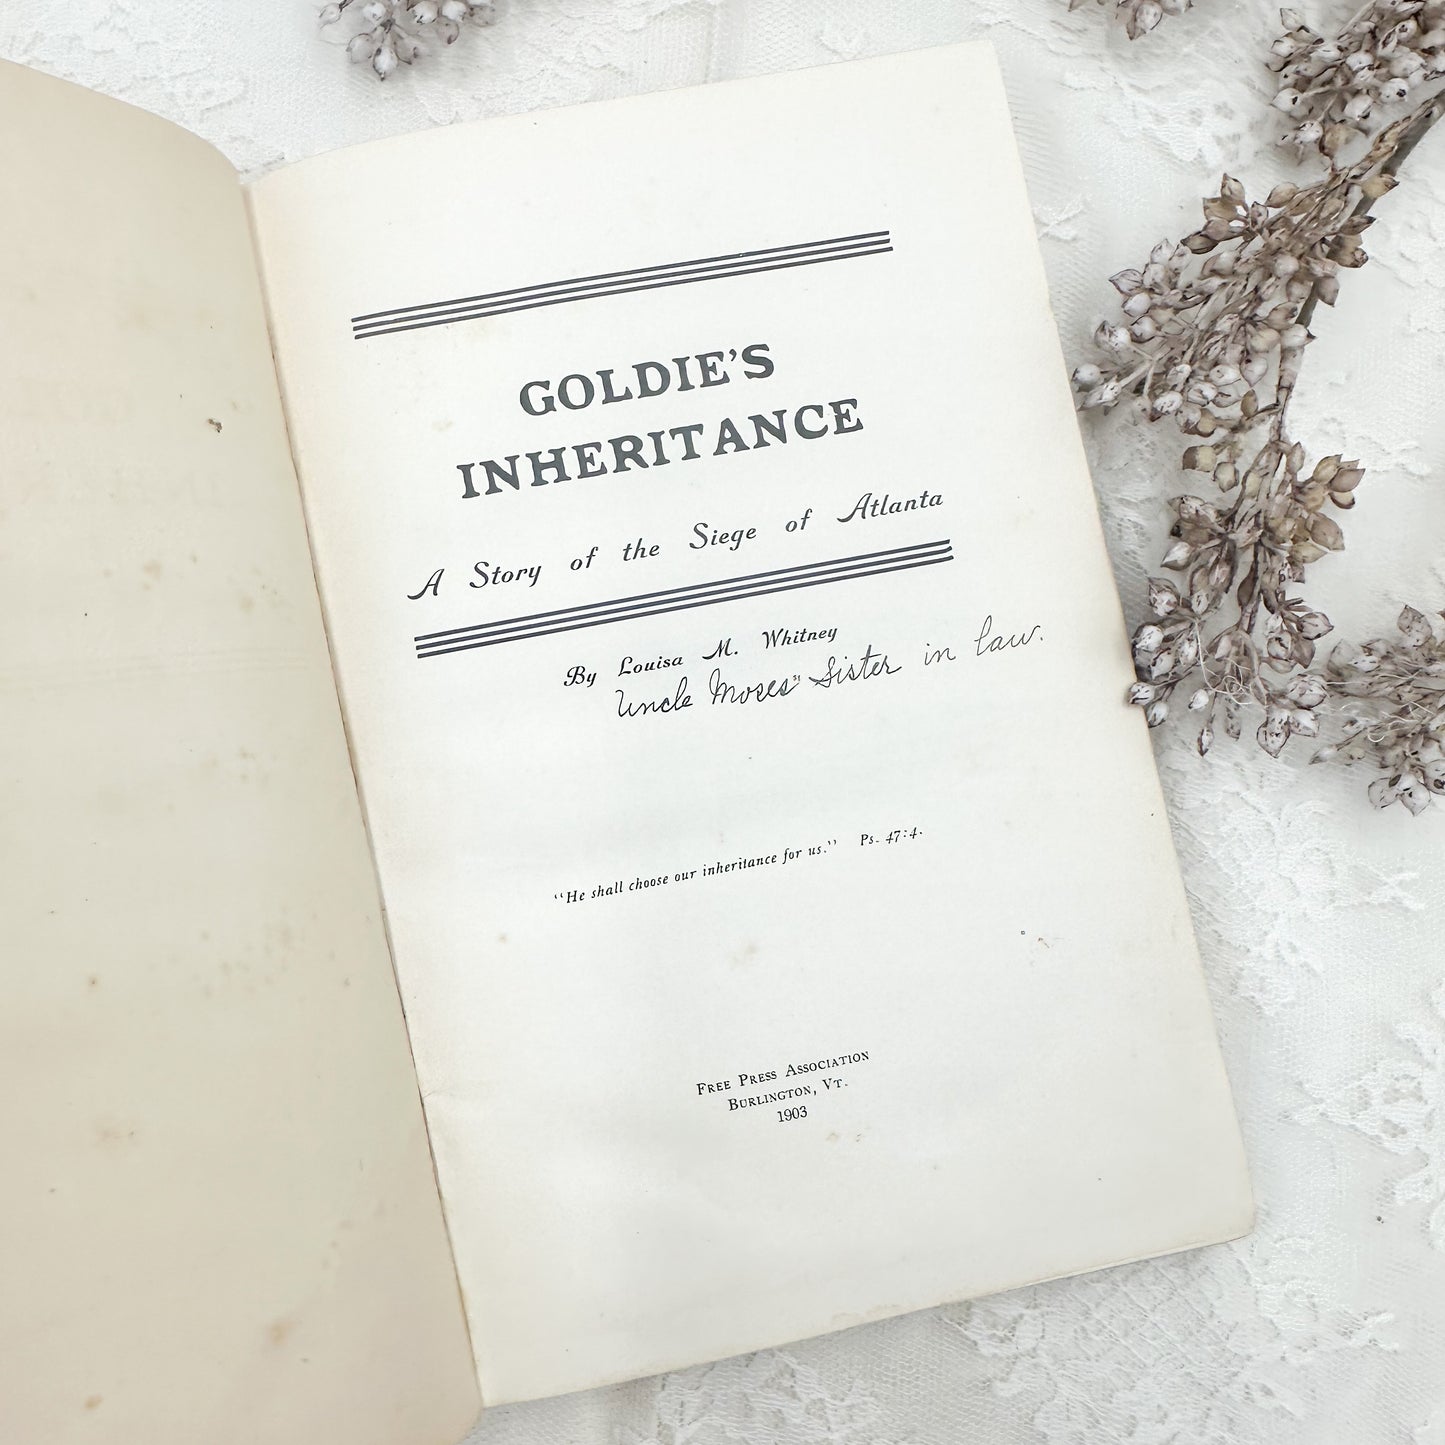 Goldie's Inheritance by Louisa M. Whitney